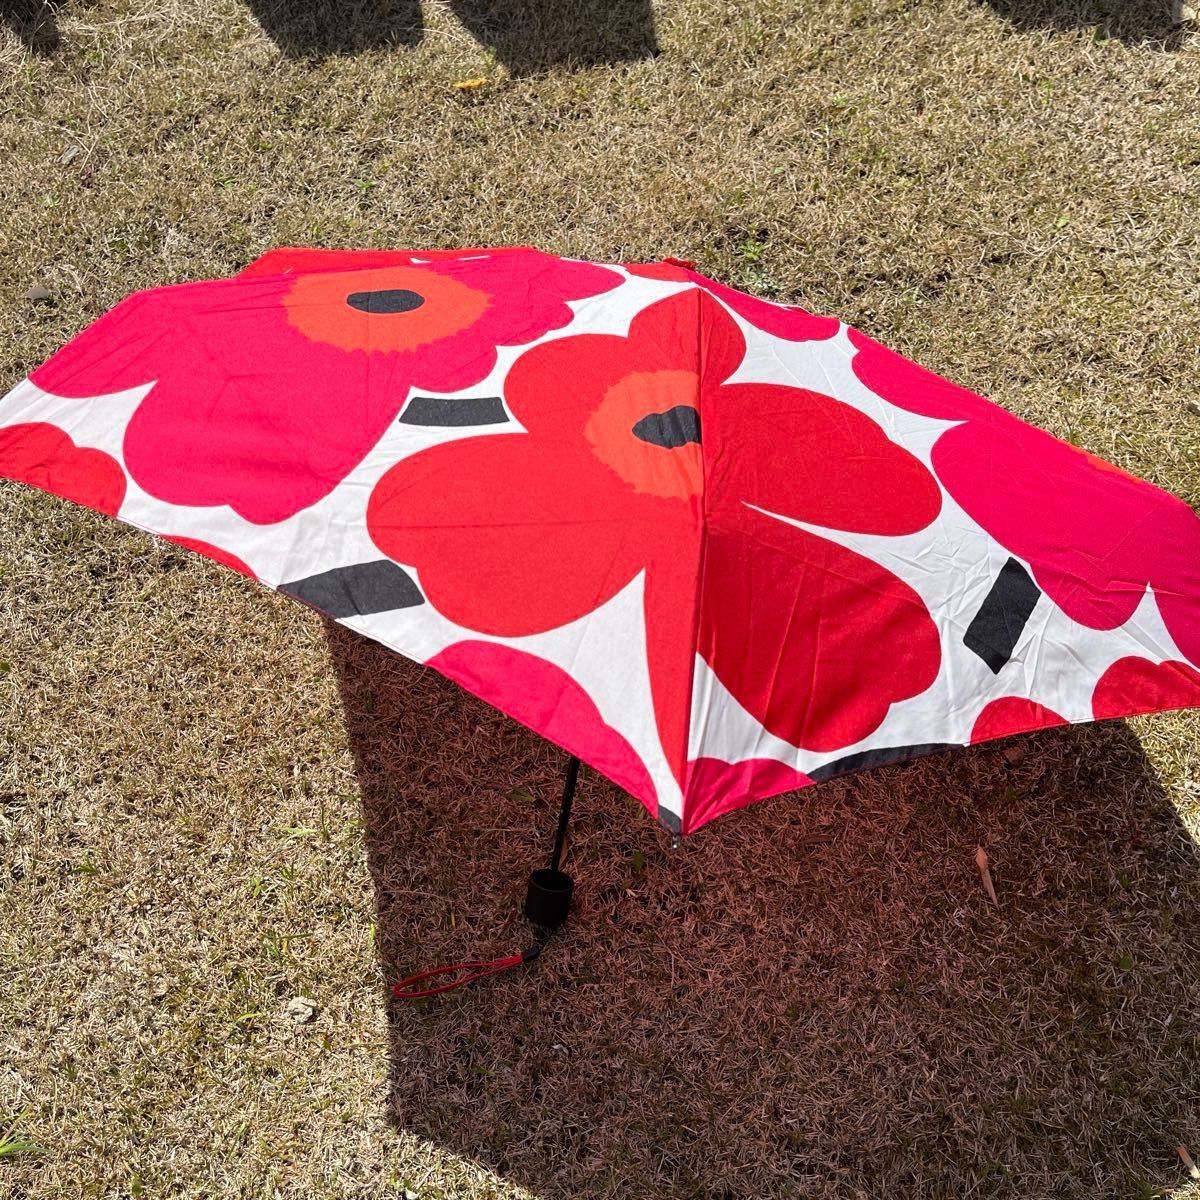 marimekko(マリメッコ) Unikko 折りたたみ傘 赤